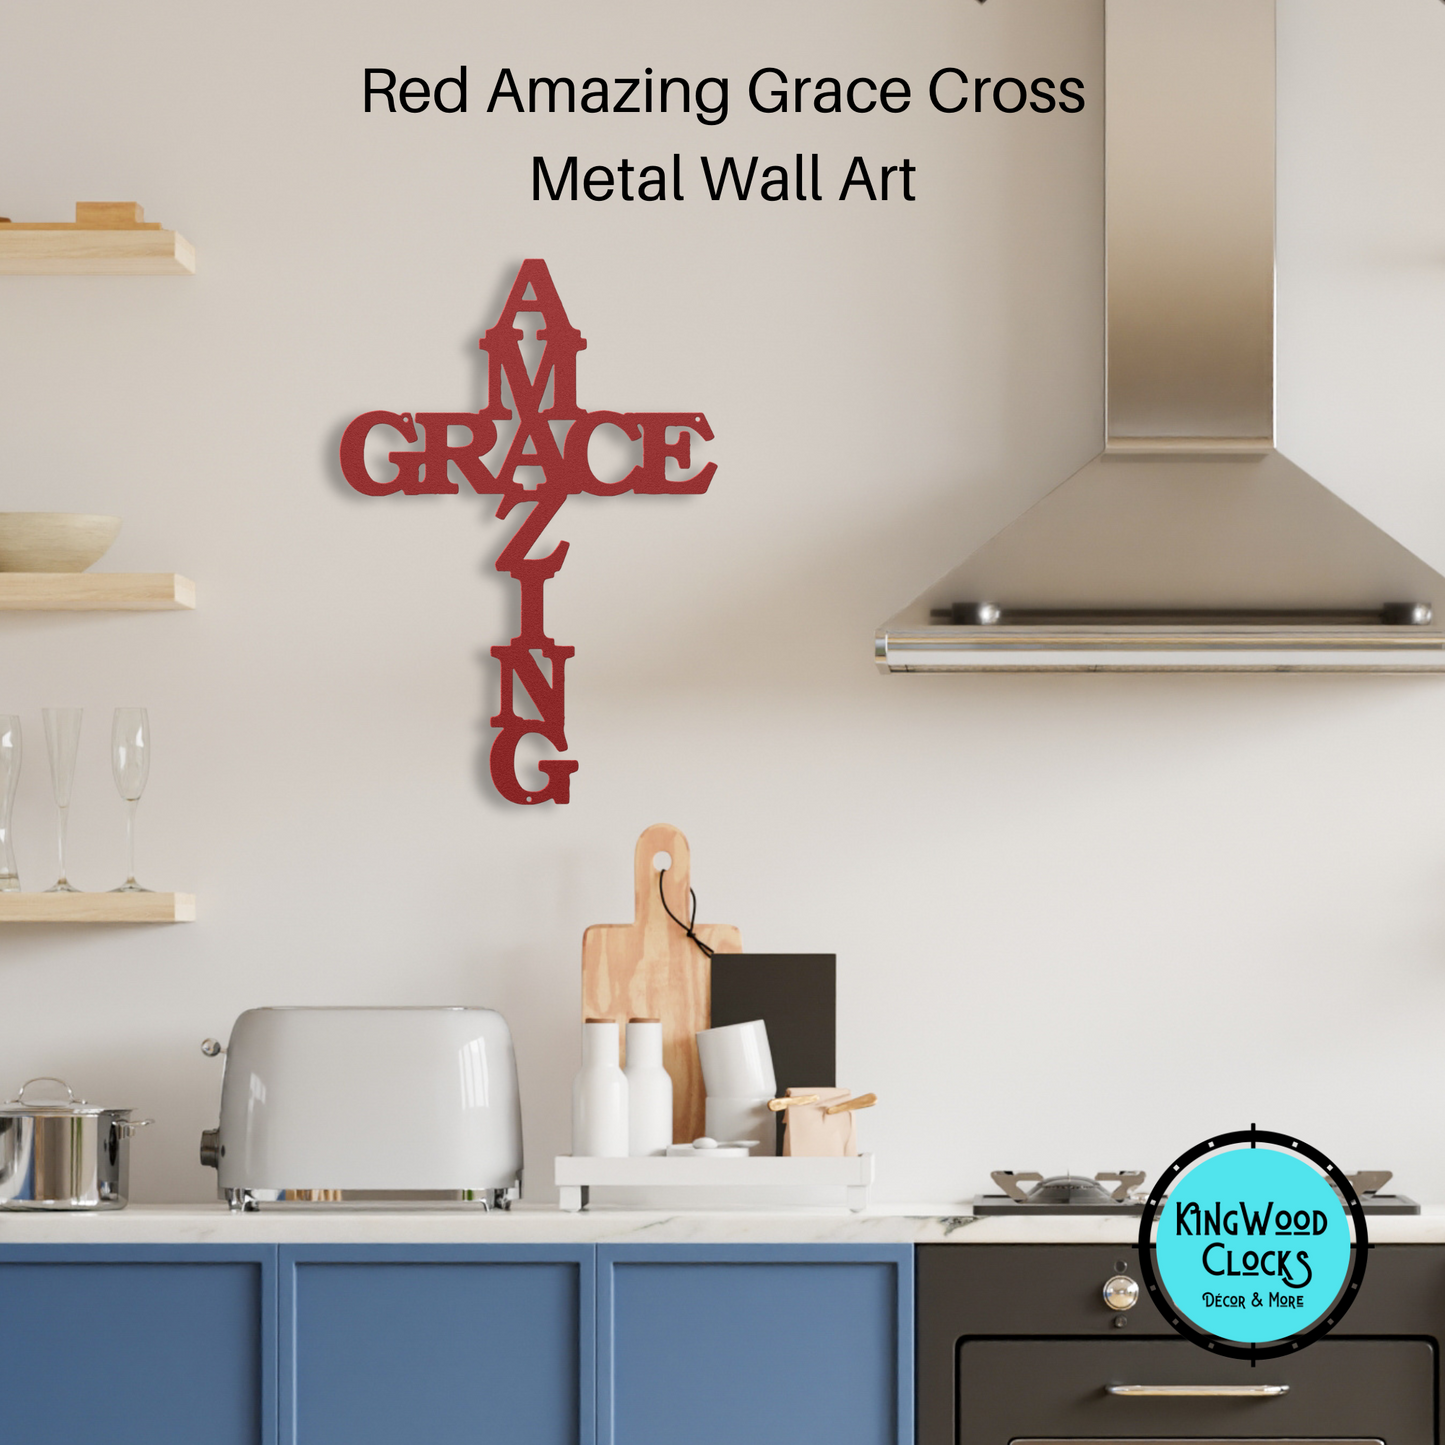 Amazing Grace Cross Metal Wall Art red in kitchen space